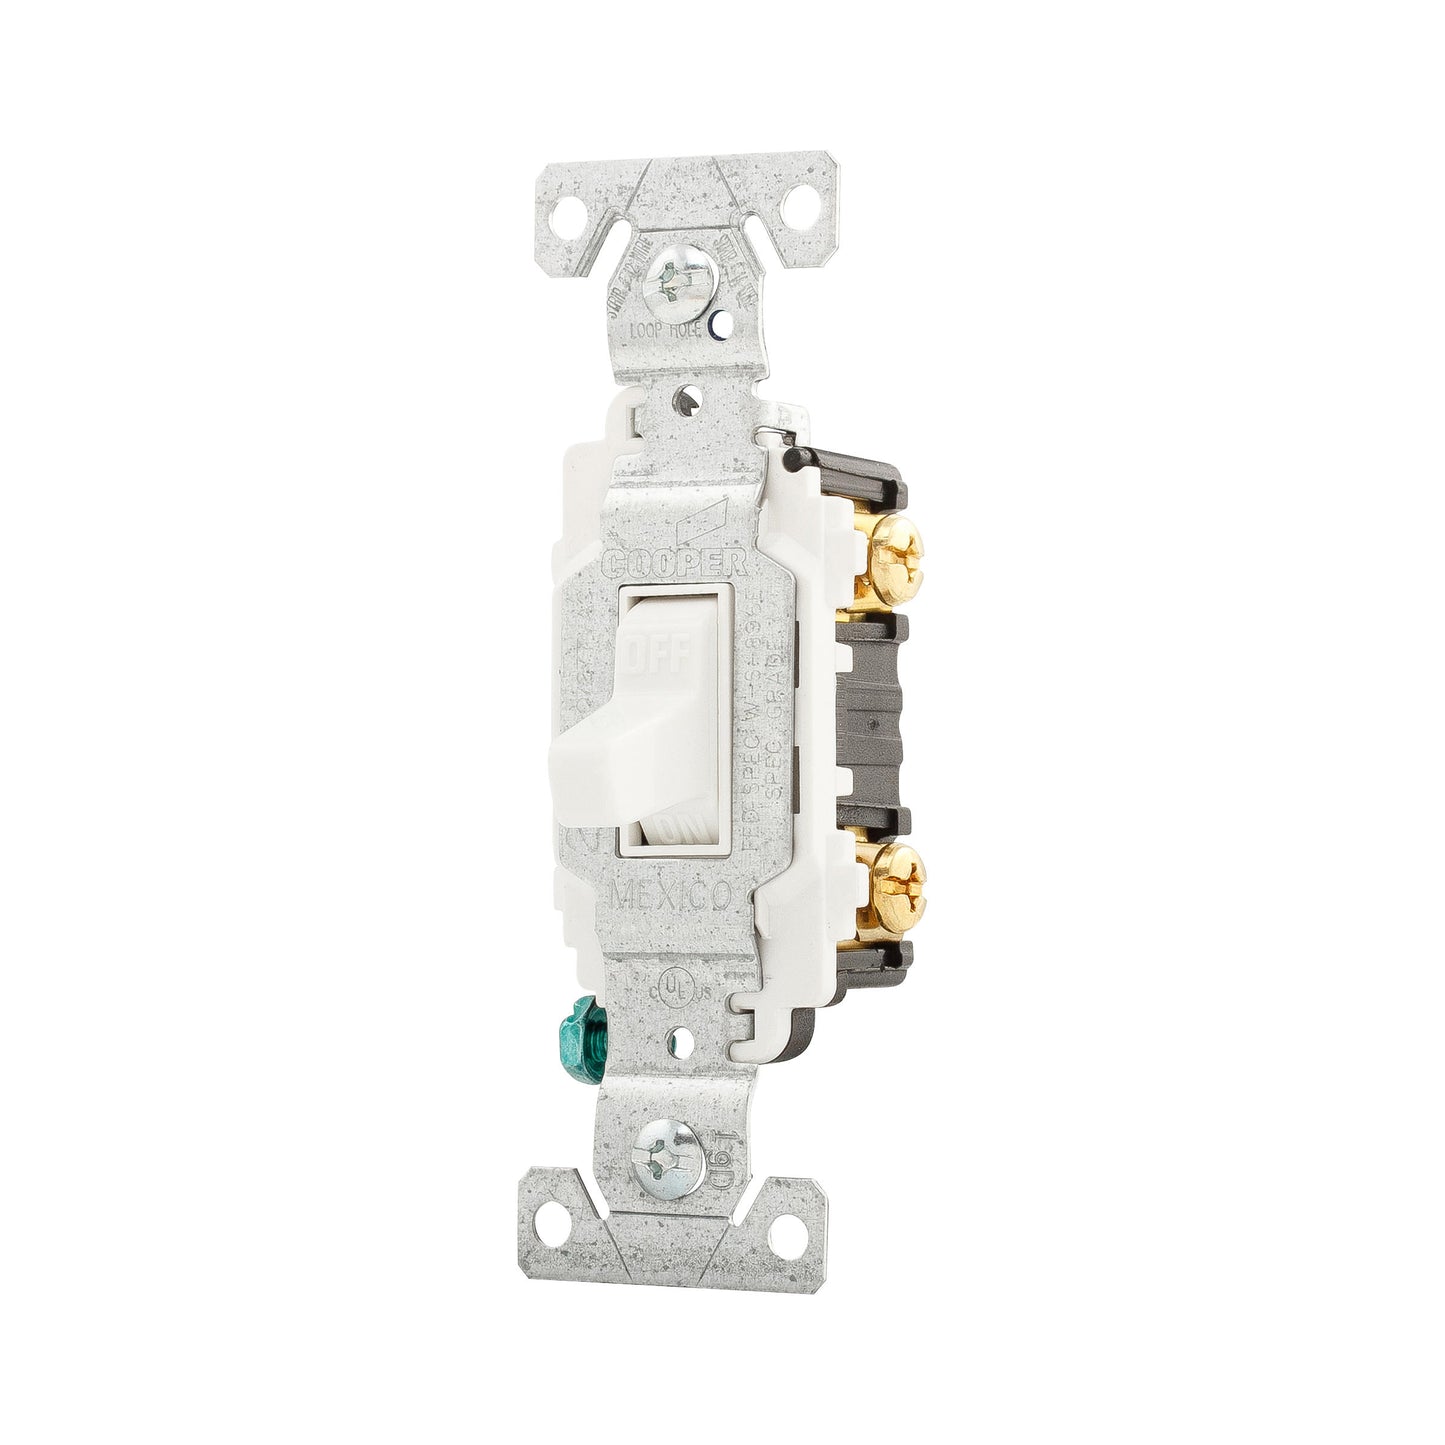 Eaton CSB220W 2-Pole Toggle Switch, 20Amp, 120/277 VAC